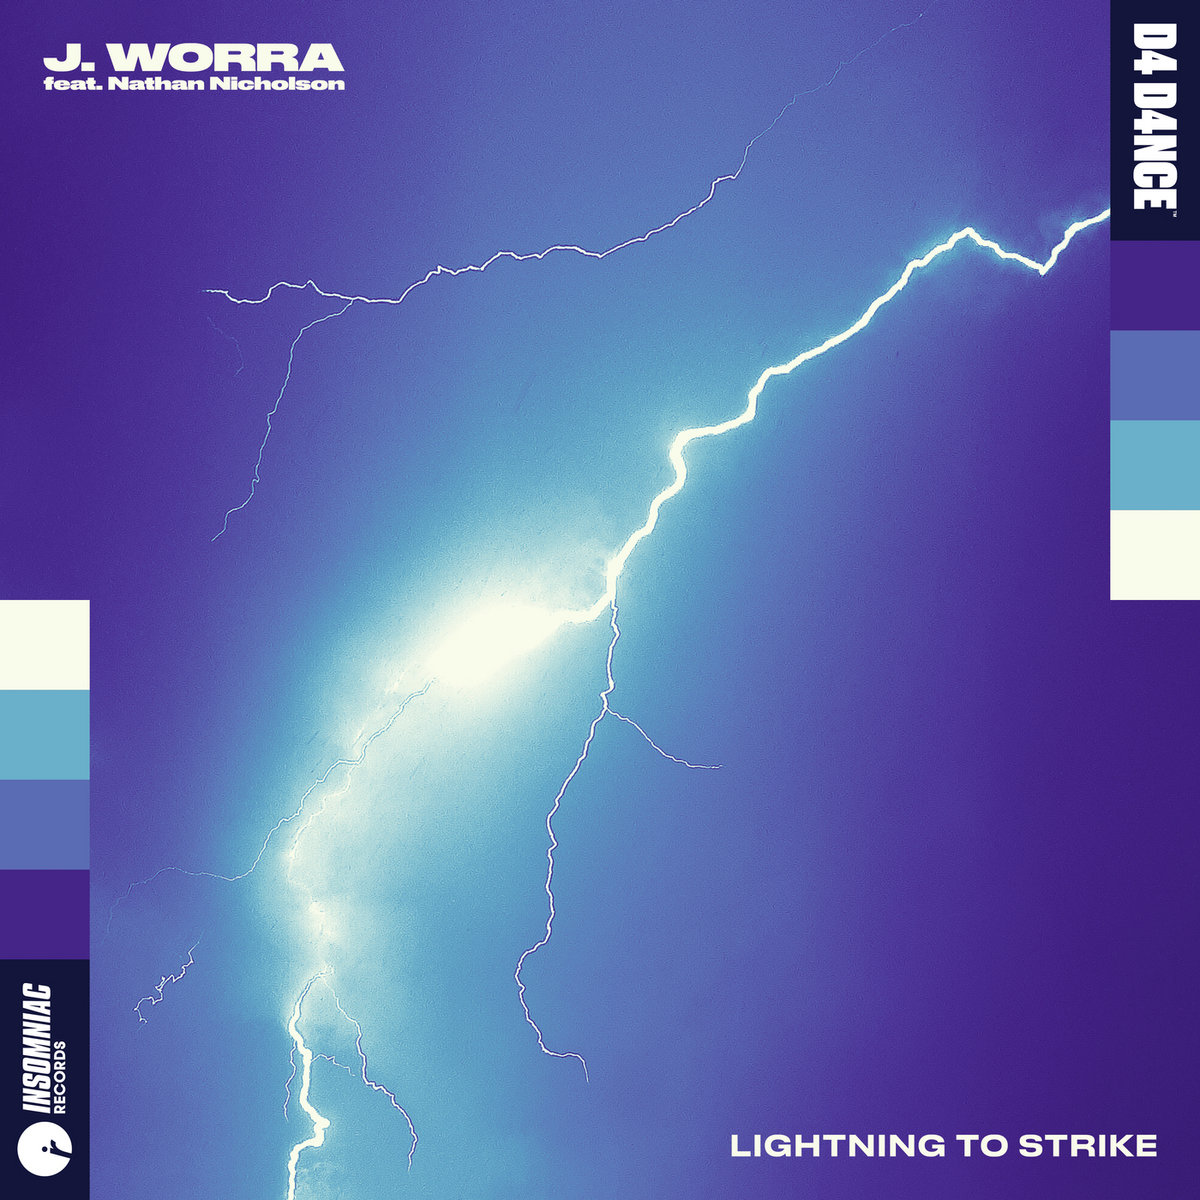 J. Worra featuring Nathan Nicholson — Lightning To Strike cover artwork